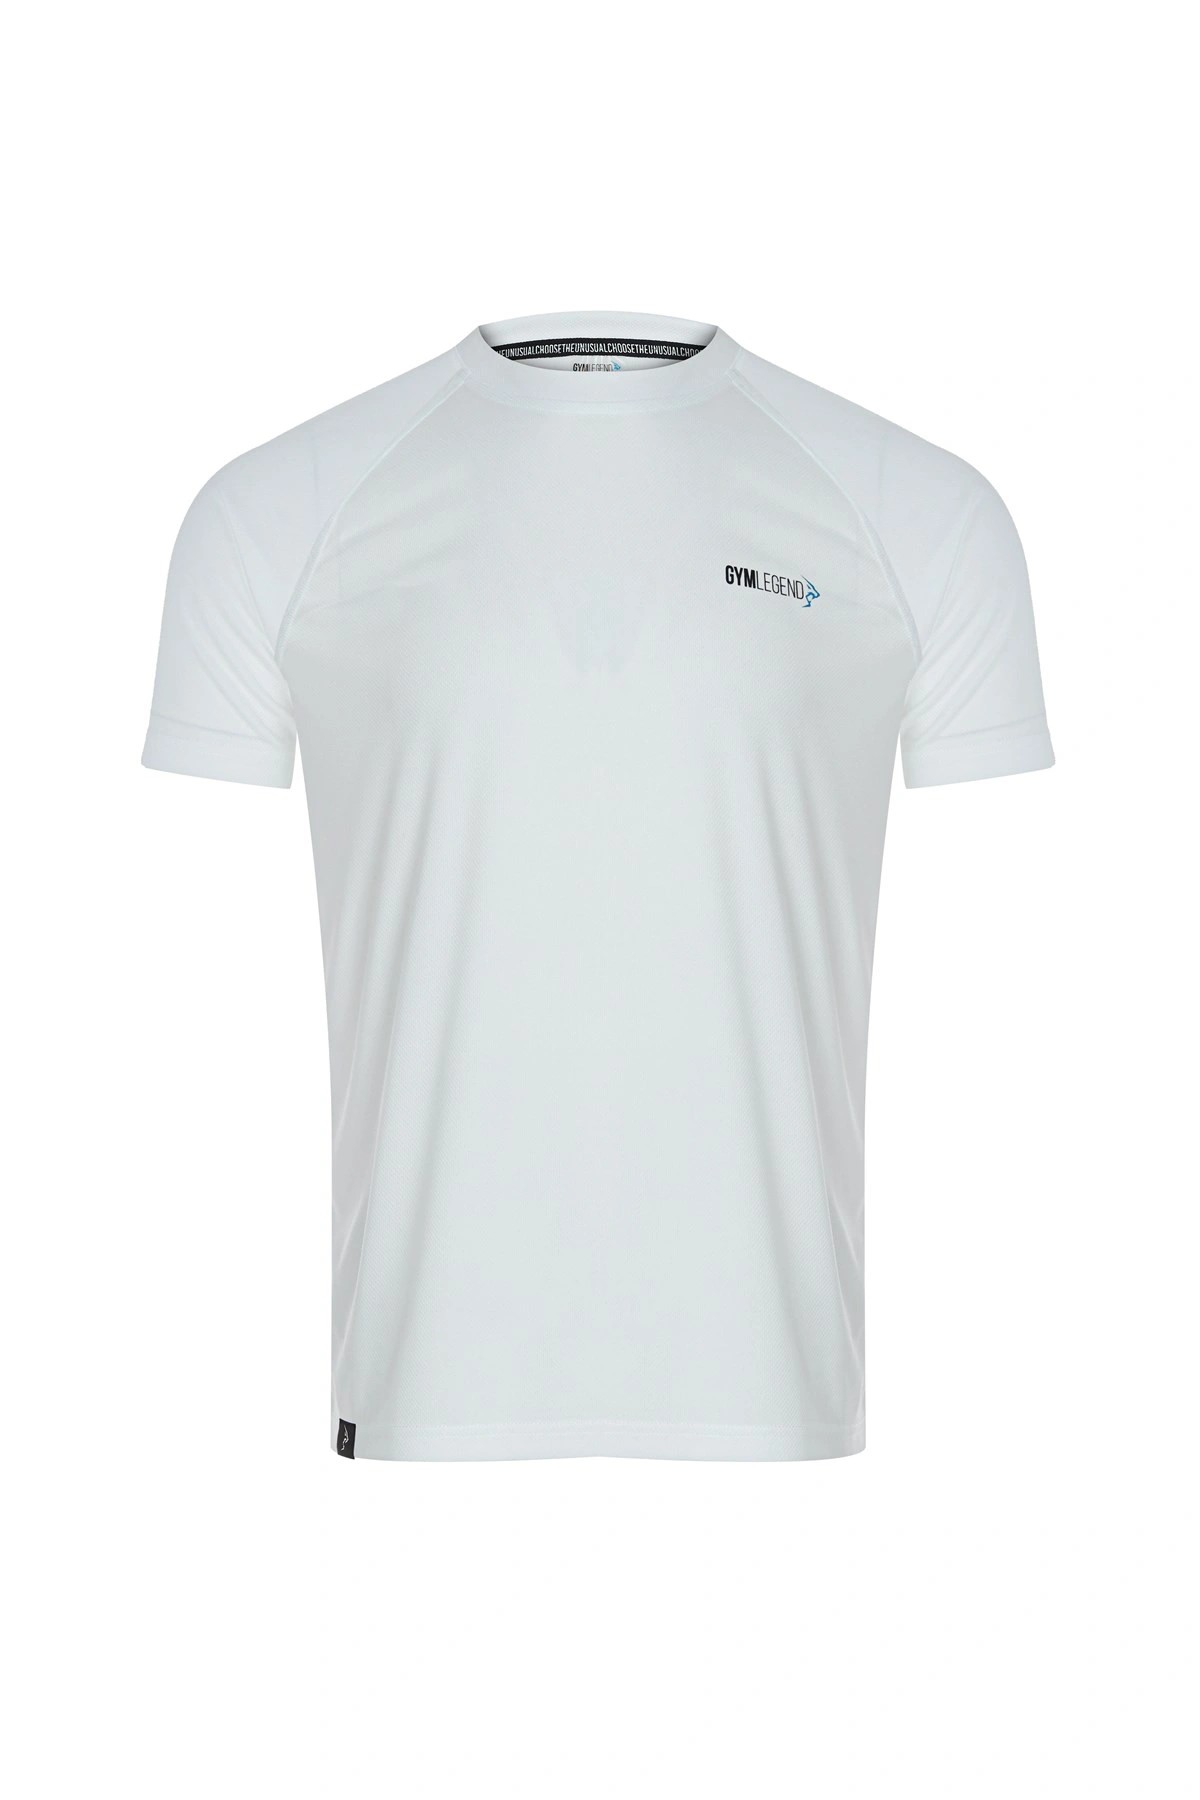 Gymlegend Erkek Beyaz Mikro Polyester Performans Antrenman Sporcu Tişört